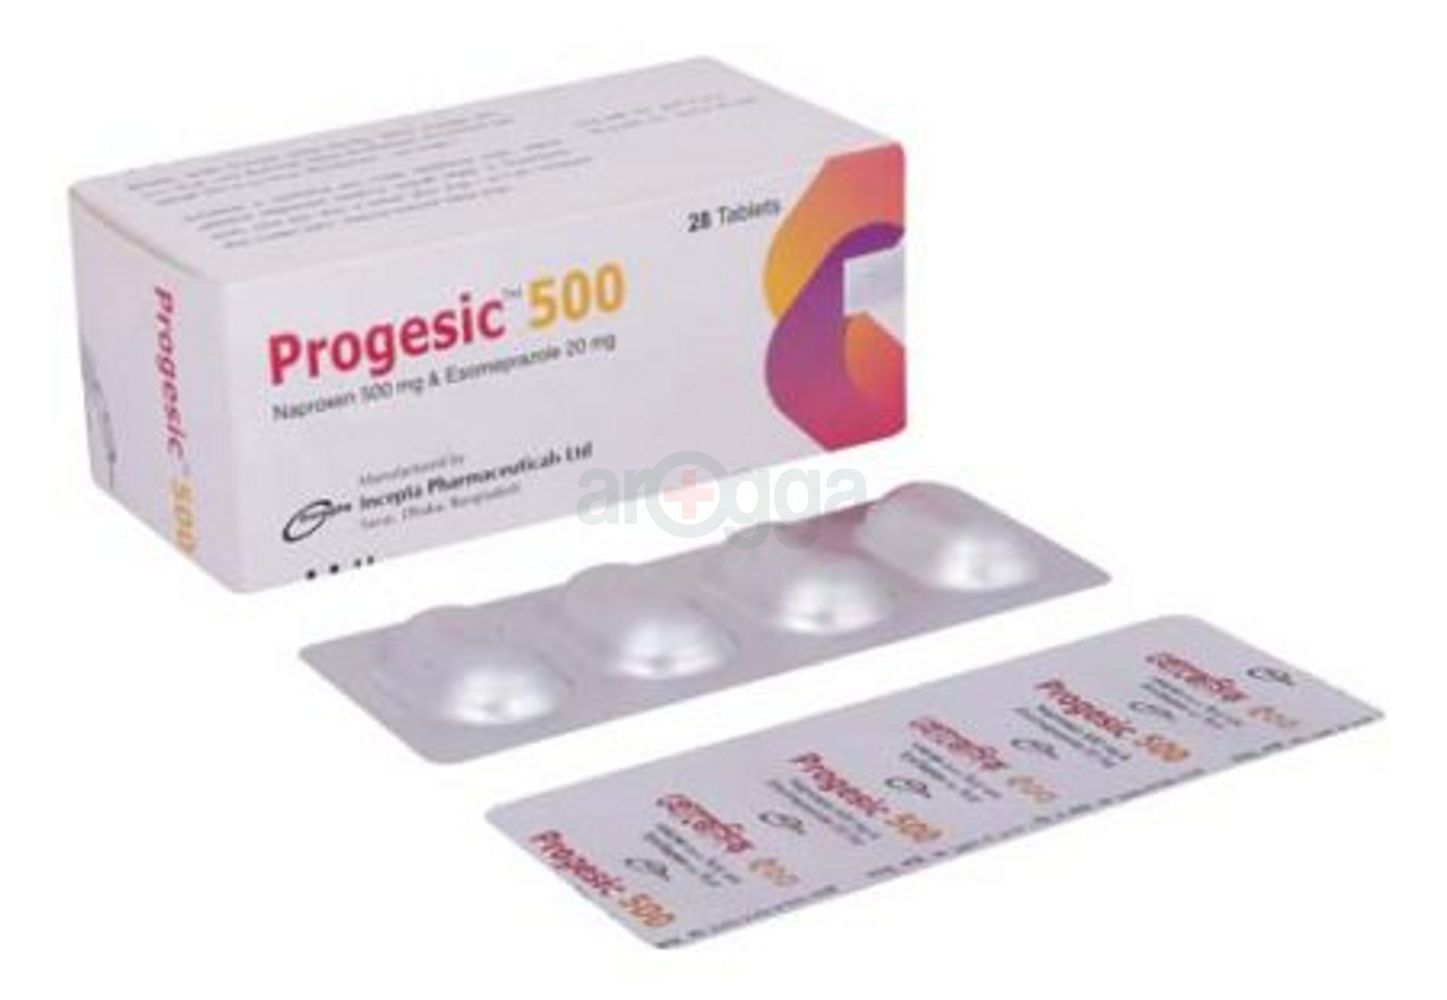 Progesic 500